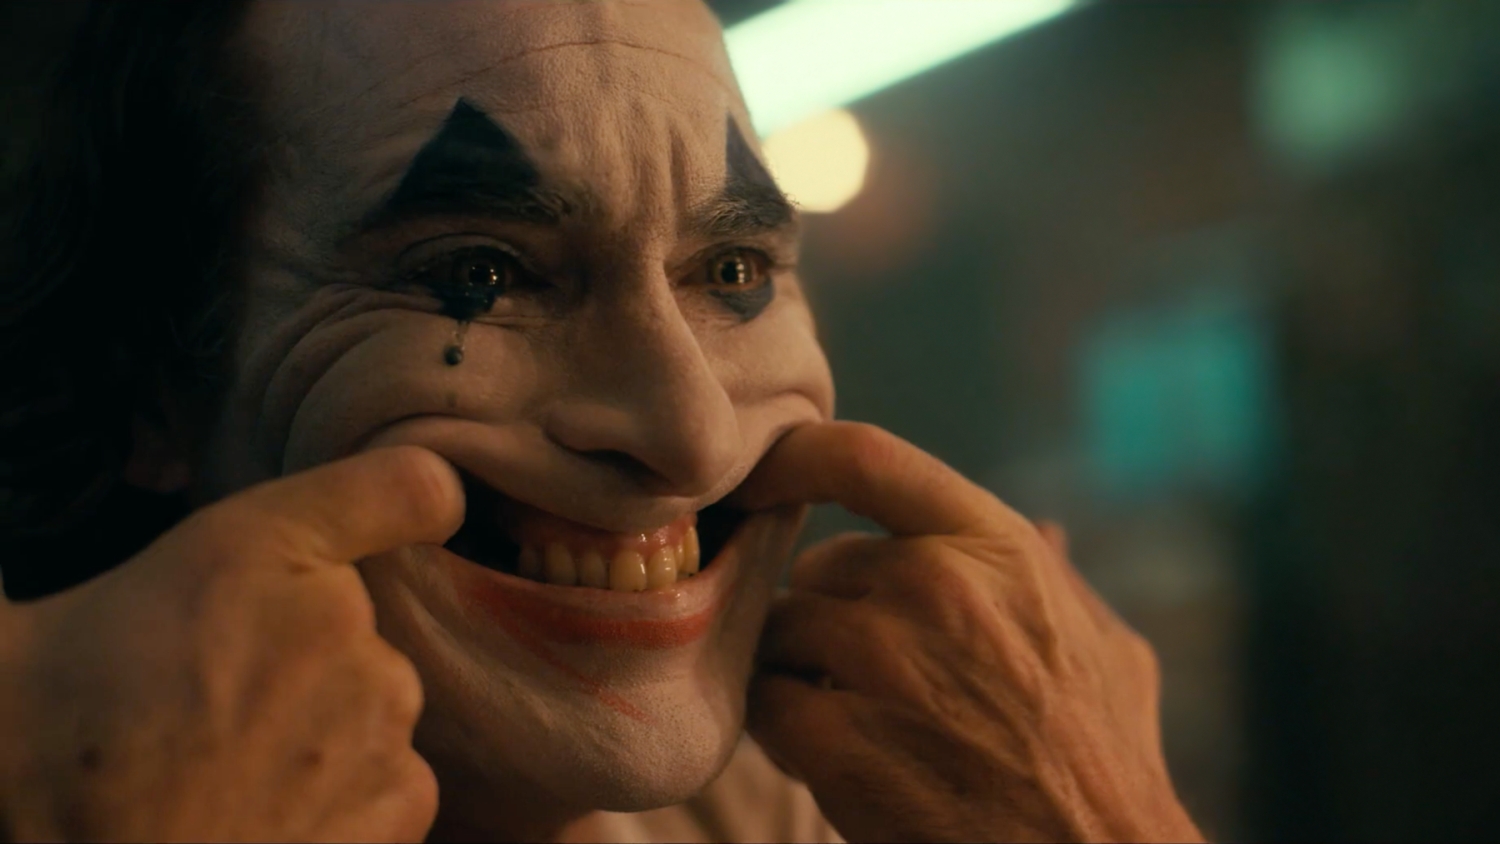 Wallpaper, Joker 2019 Movie, Joaquin Phoenix, men, movies, film stills, makeup, smiling, crying, depth of field 1500x844